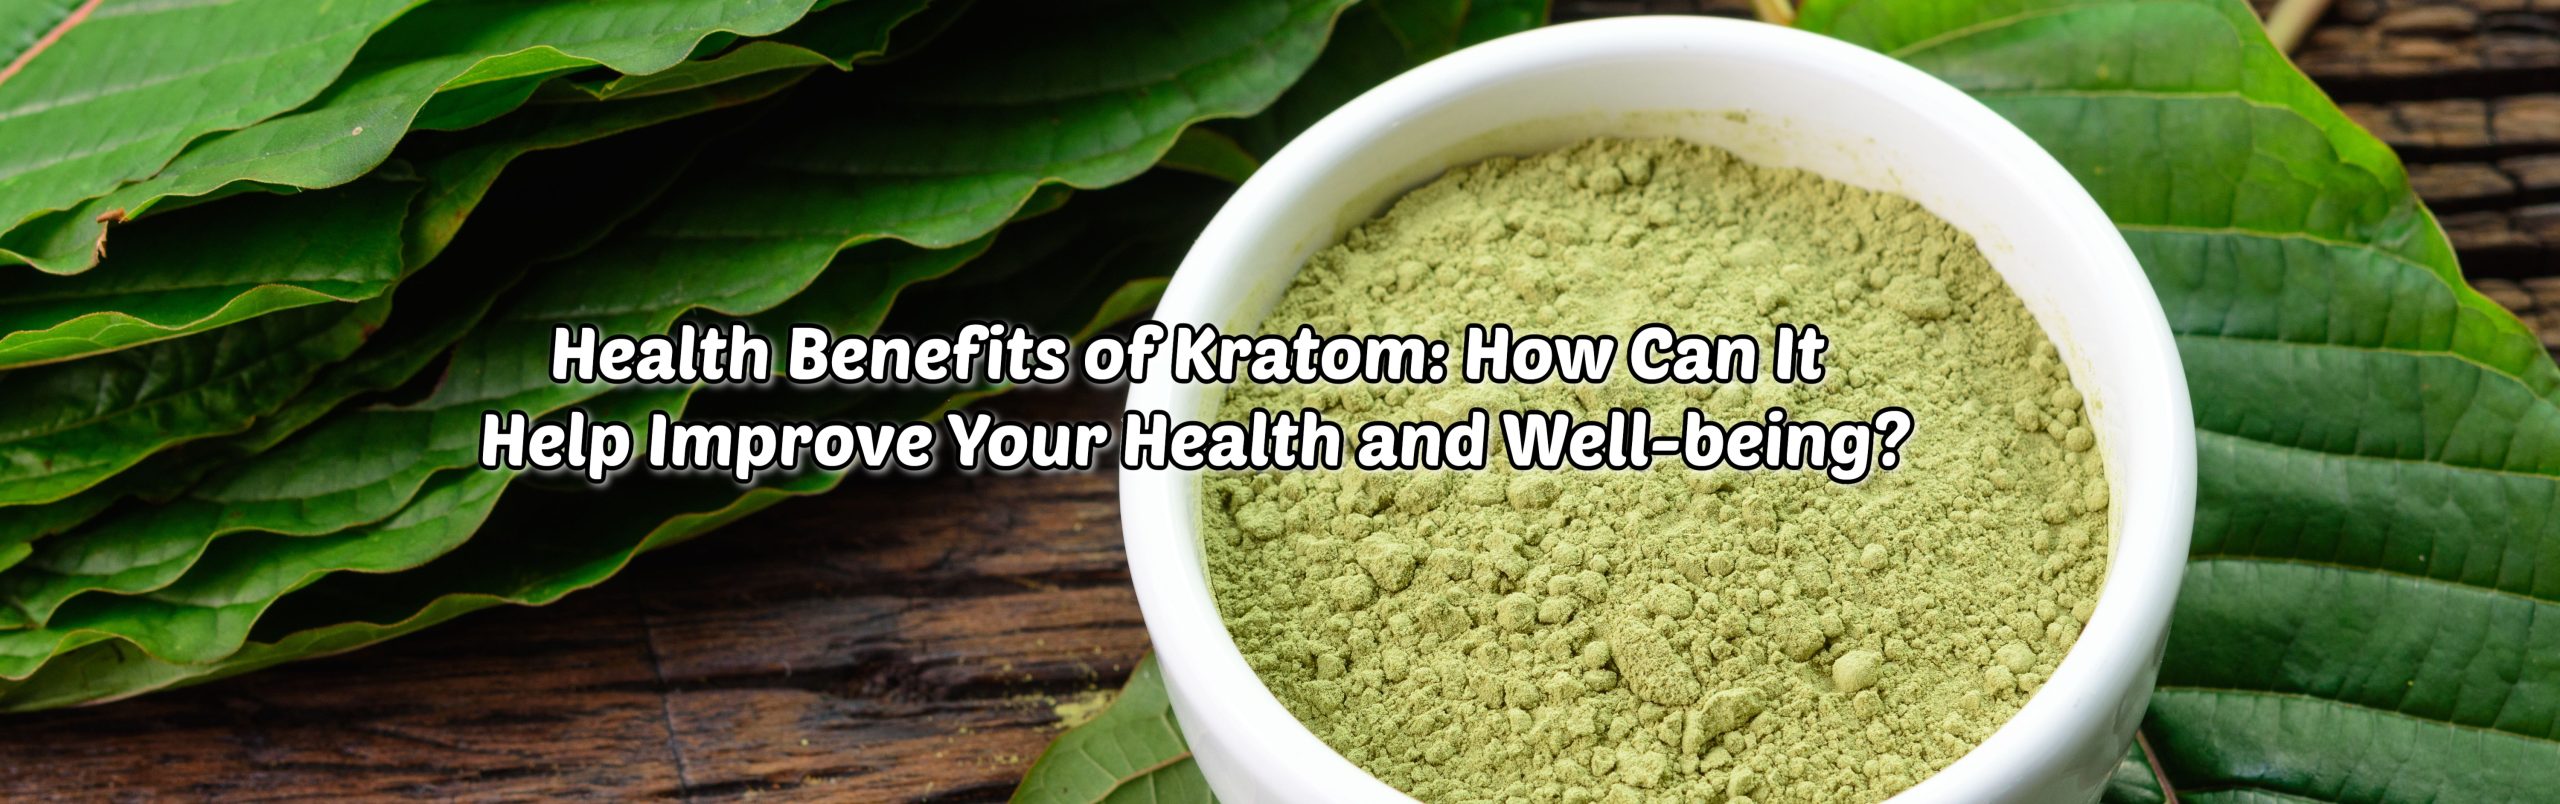 image of health benefits of kratom